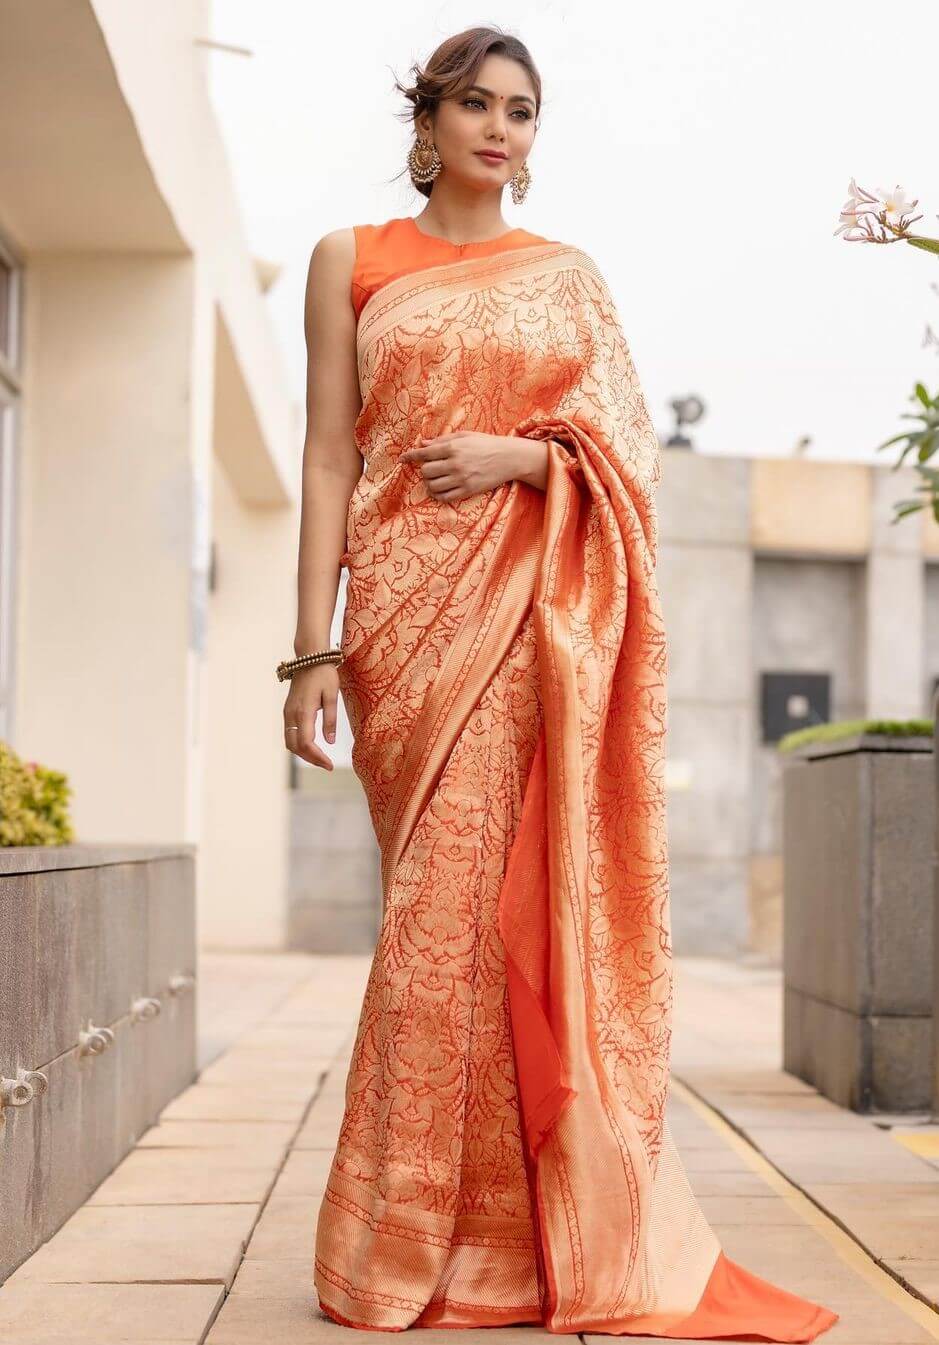 Sana Makbul In Orange Banarasi Silk Saree With Sleeveless Blouse